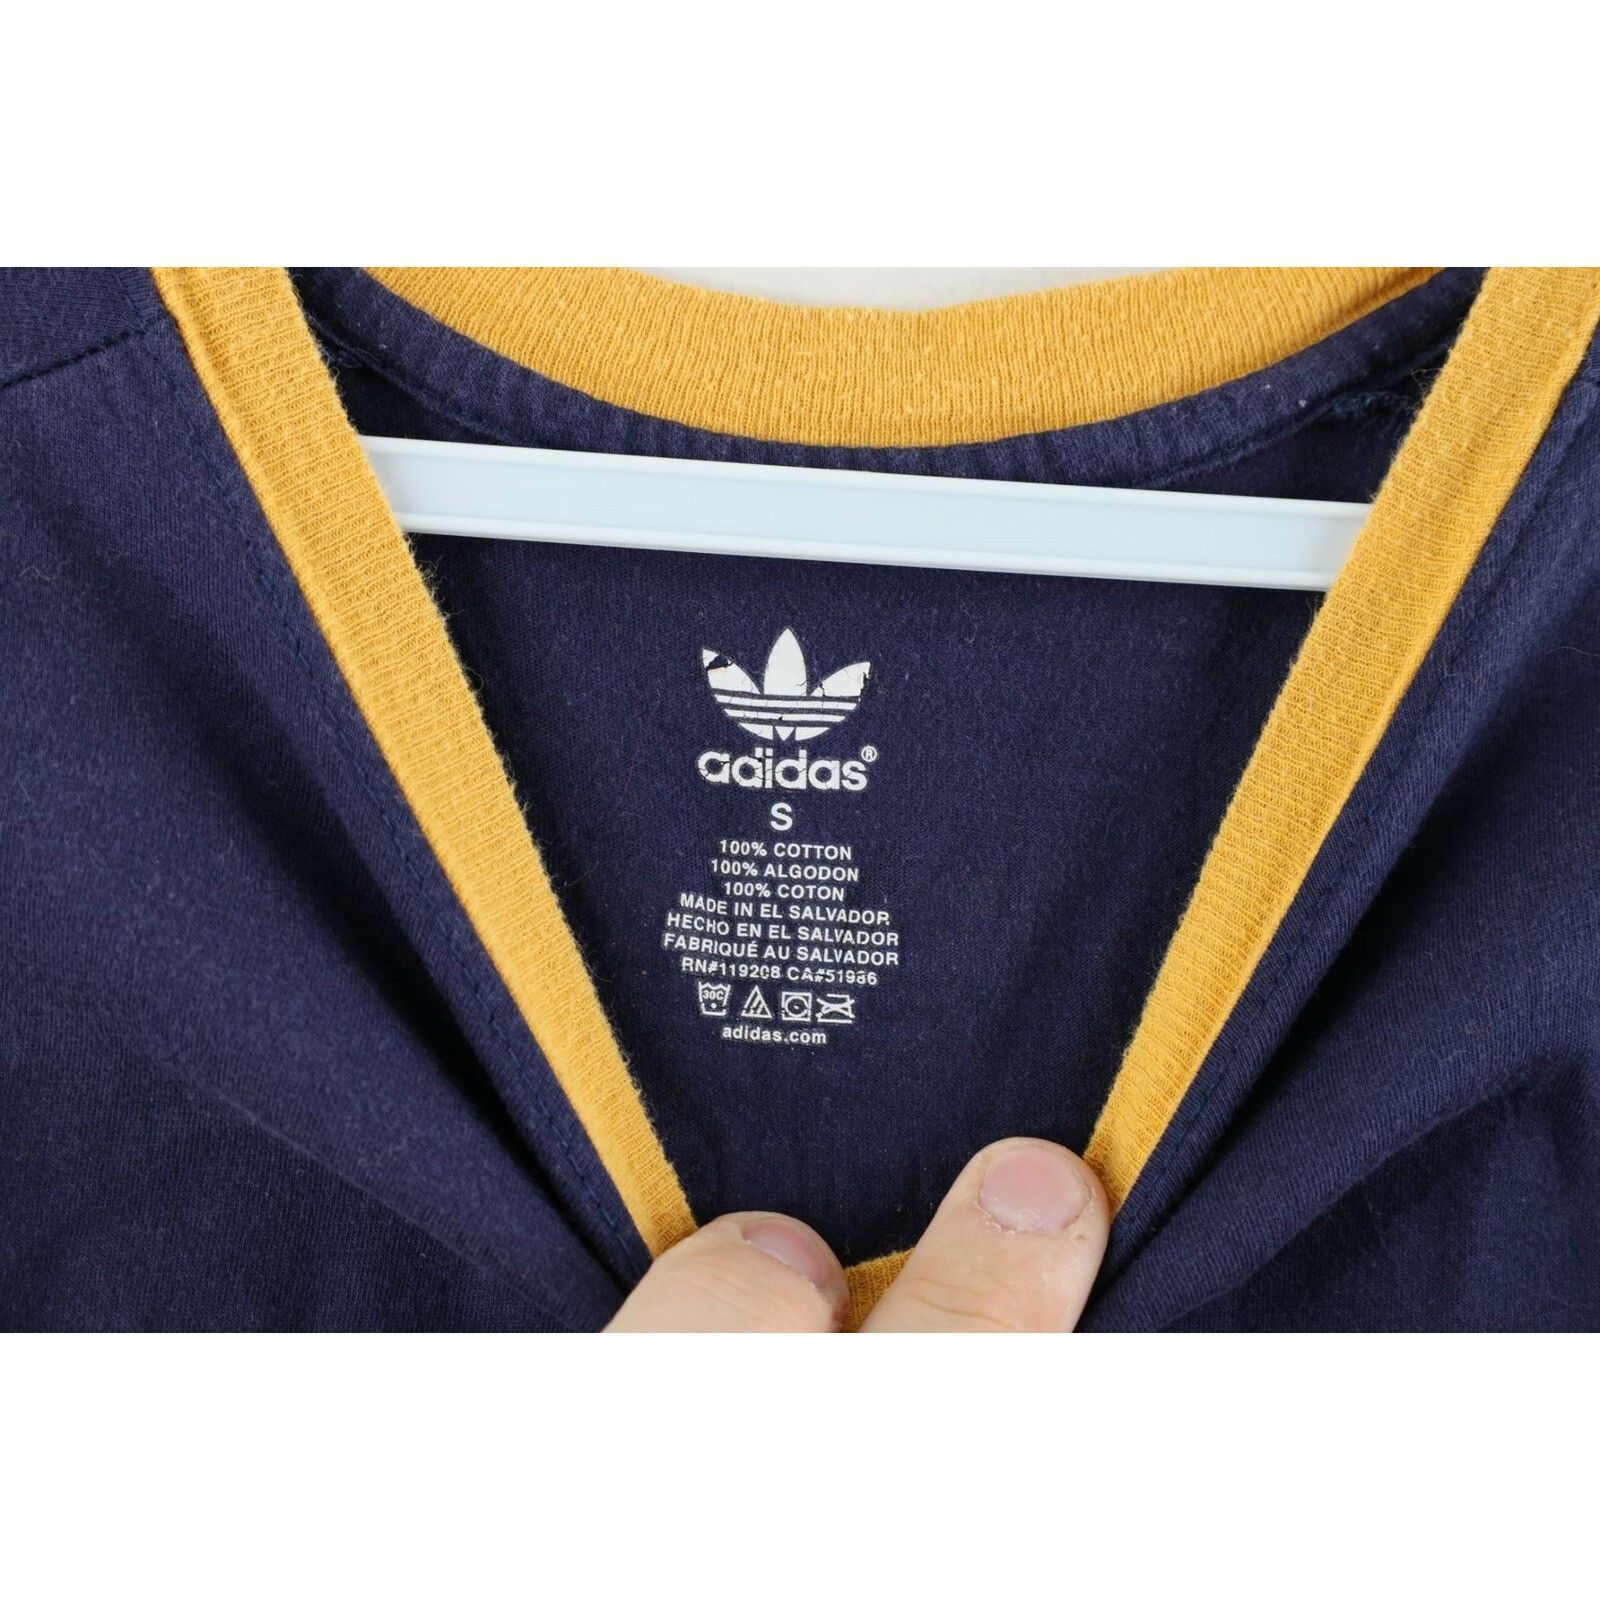 Adidas Adidas Retro University of Michigan Spell Out Ringer T-Shirt Size US S / EU 44-46 / 1 - 5 Thumbnail